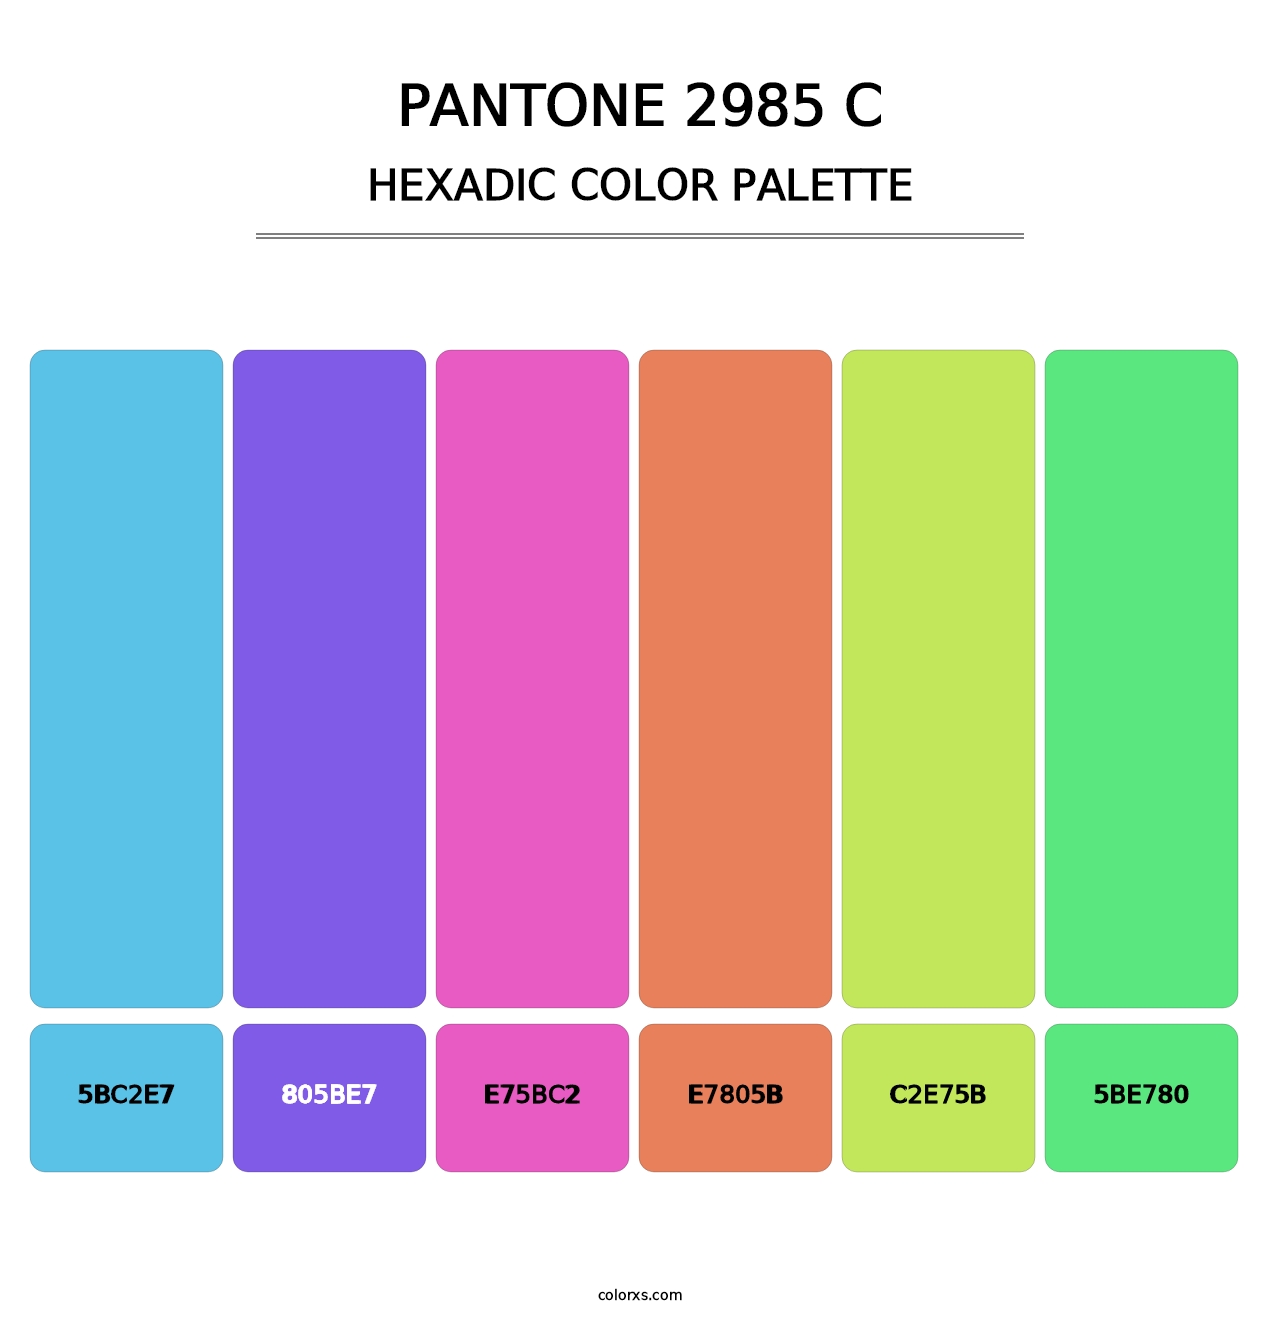 PANTONE 2985 C - Hexadic Color Palette